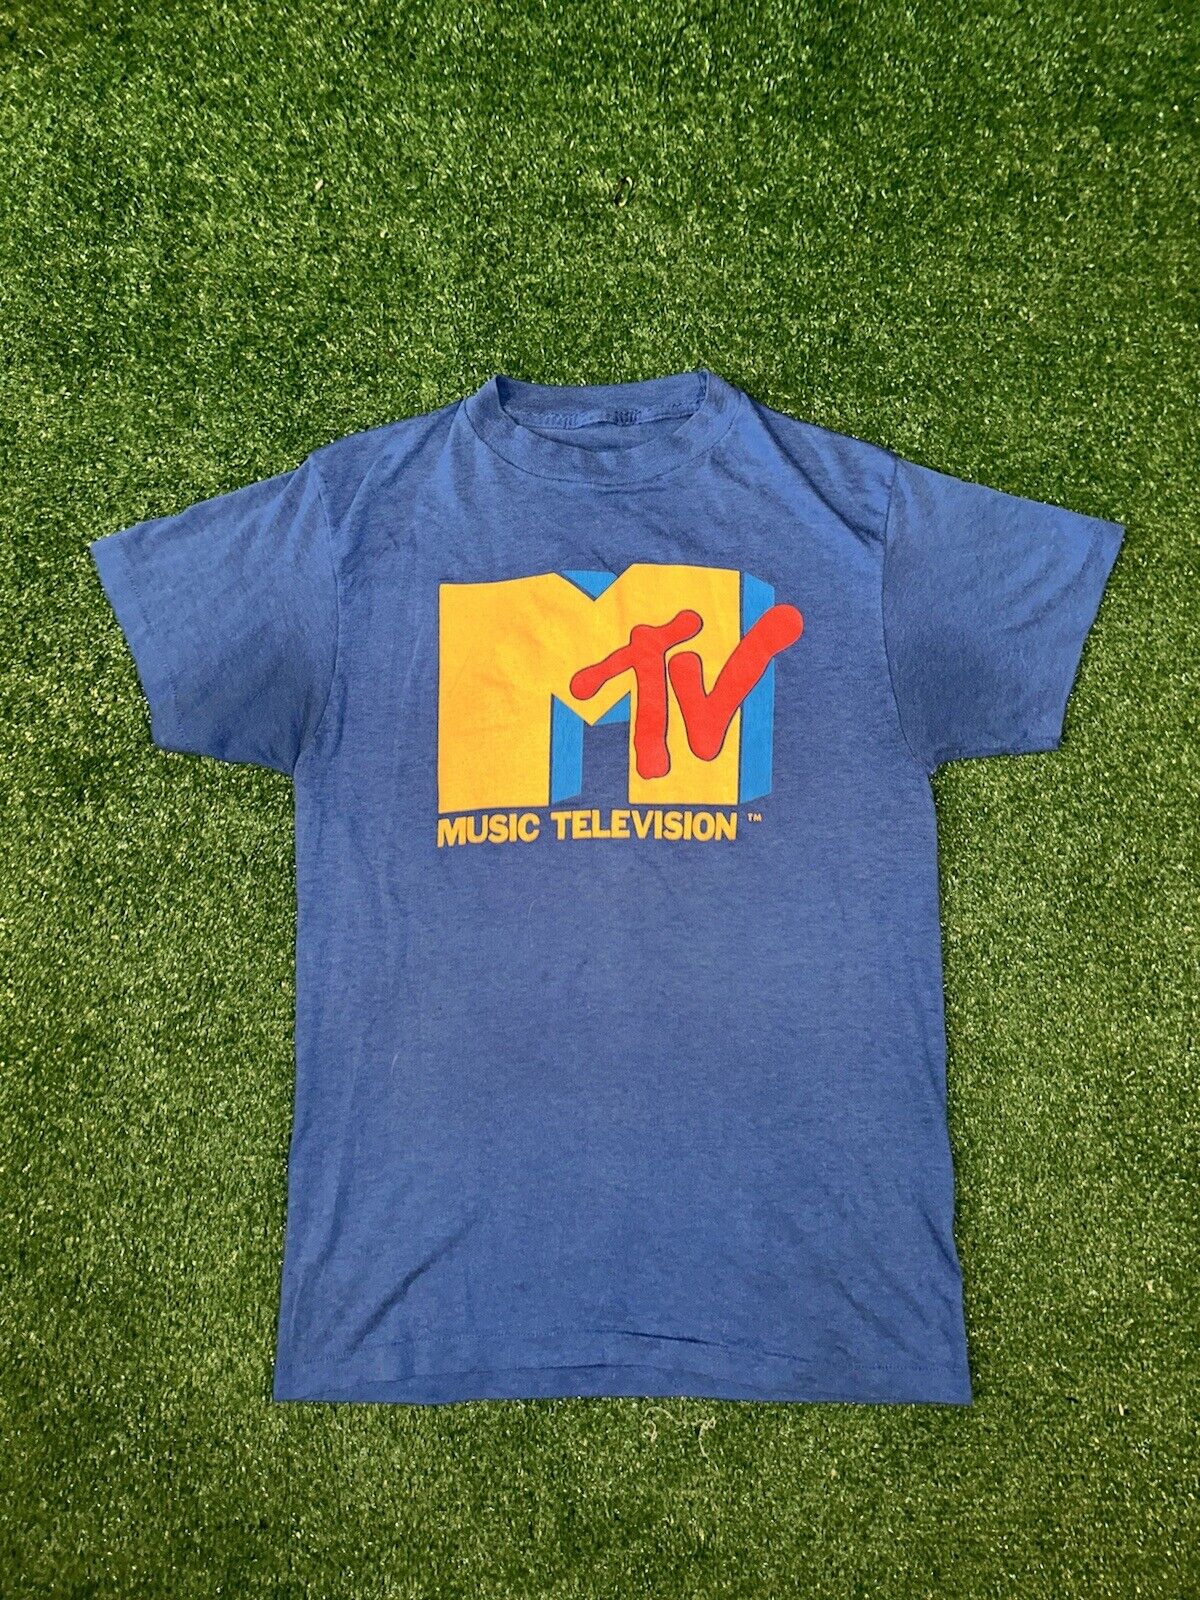 Vintage 1980’s MTV Music Shirt - M